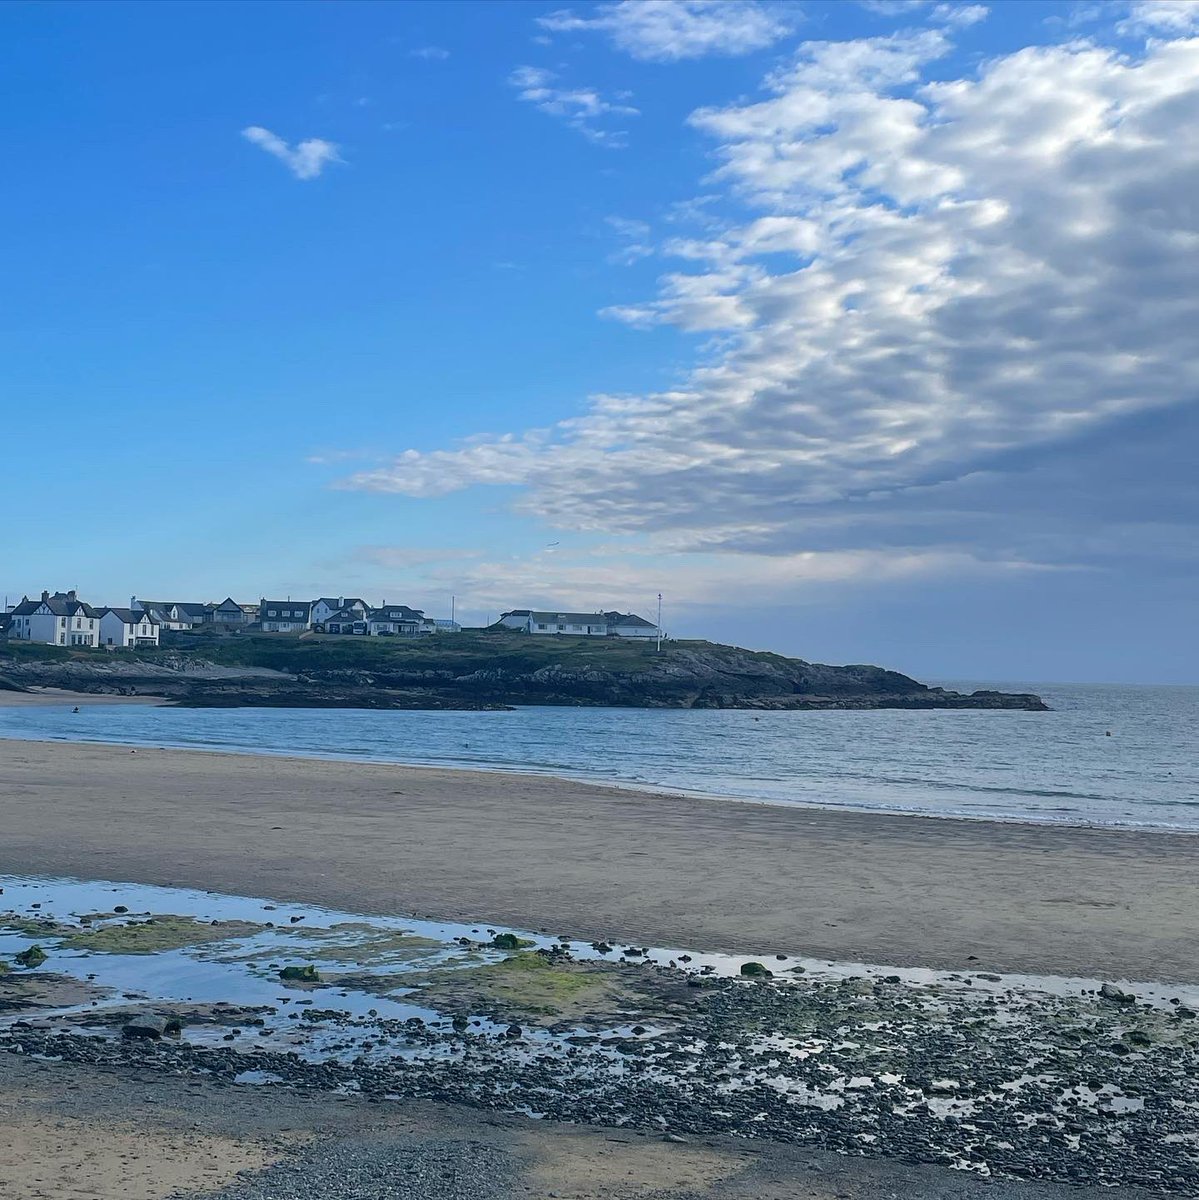 Evening #Anglesey #TreaddurBay #SeaShanty